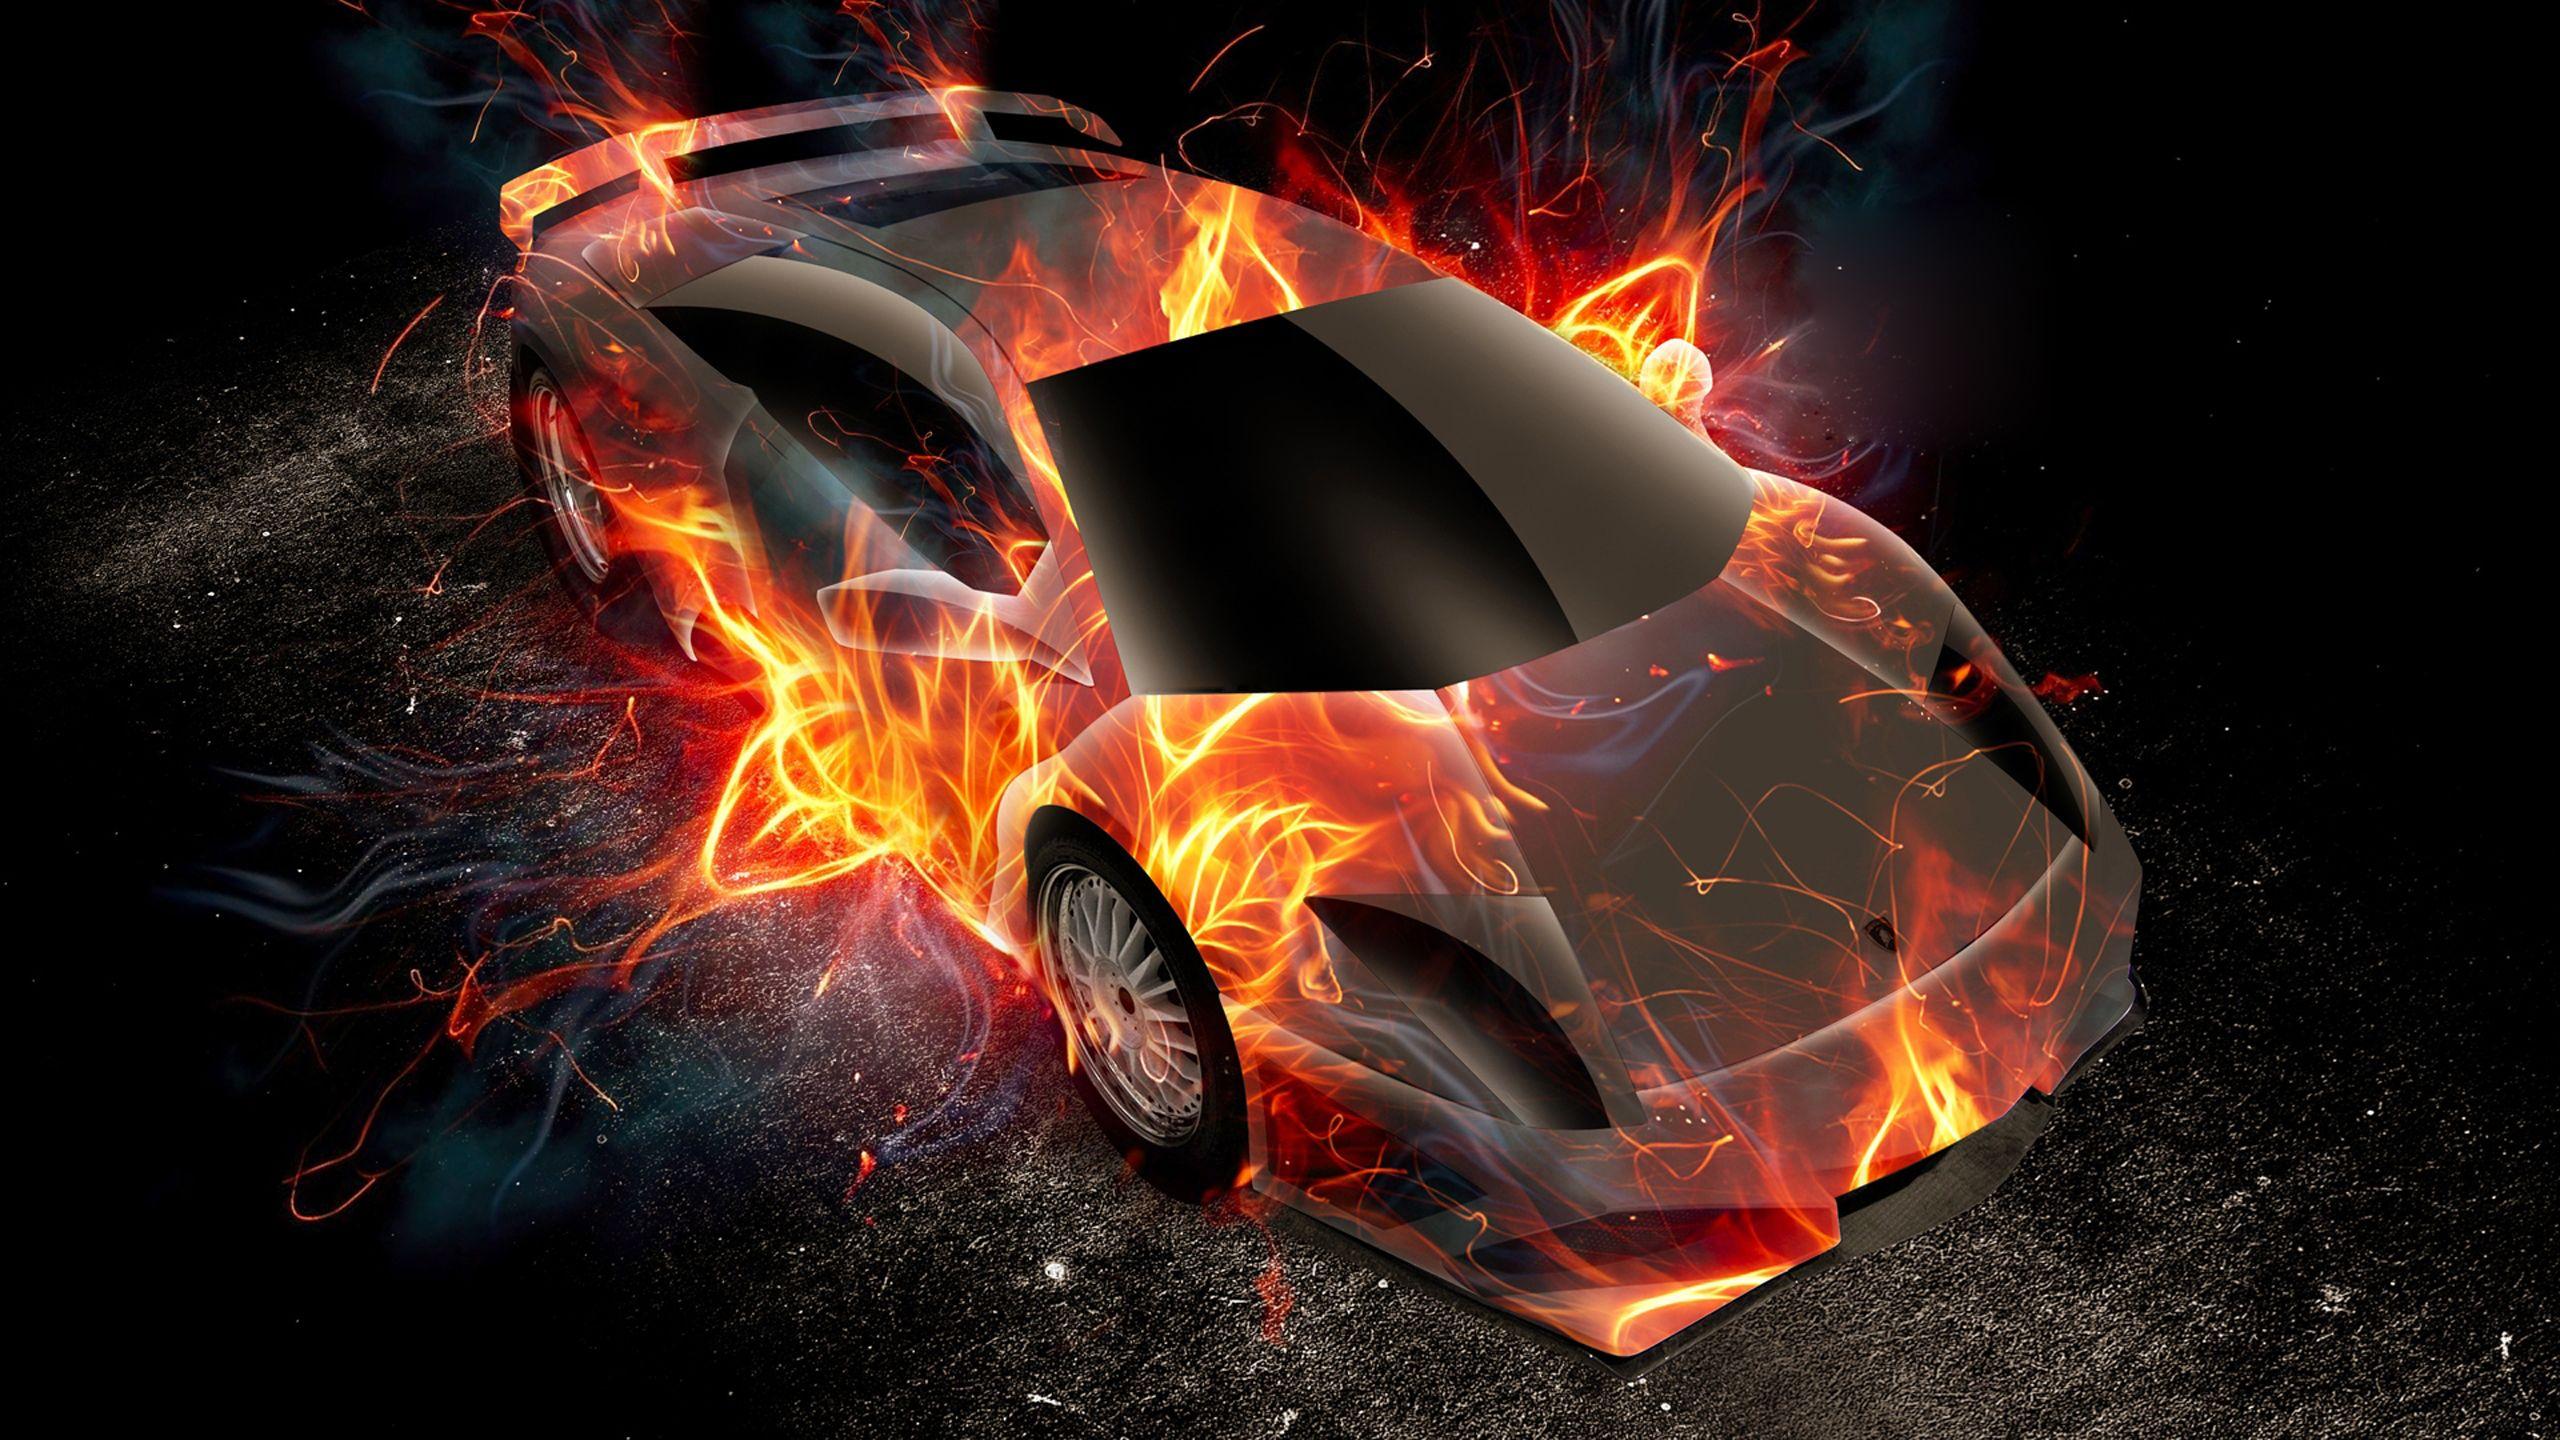 Lamborghini Flame Fantasy World Famous Car Design Wallpaper For Pc